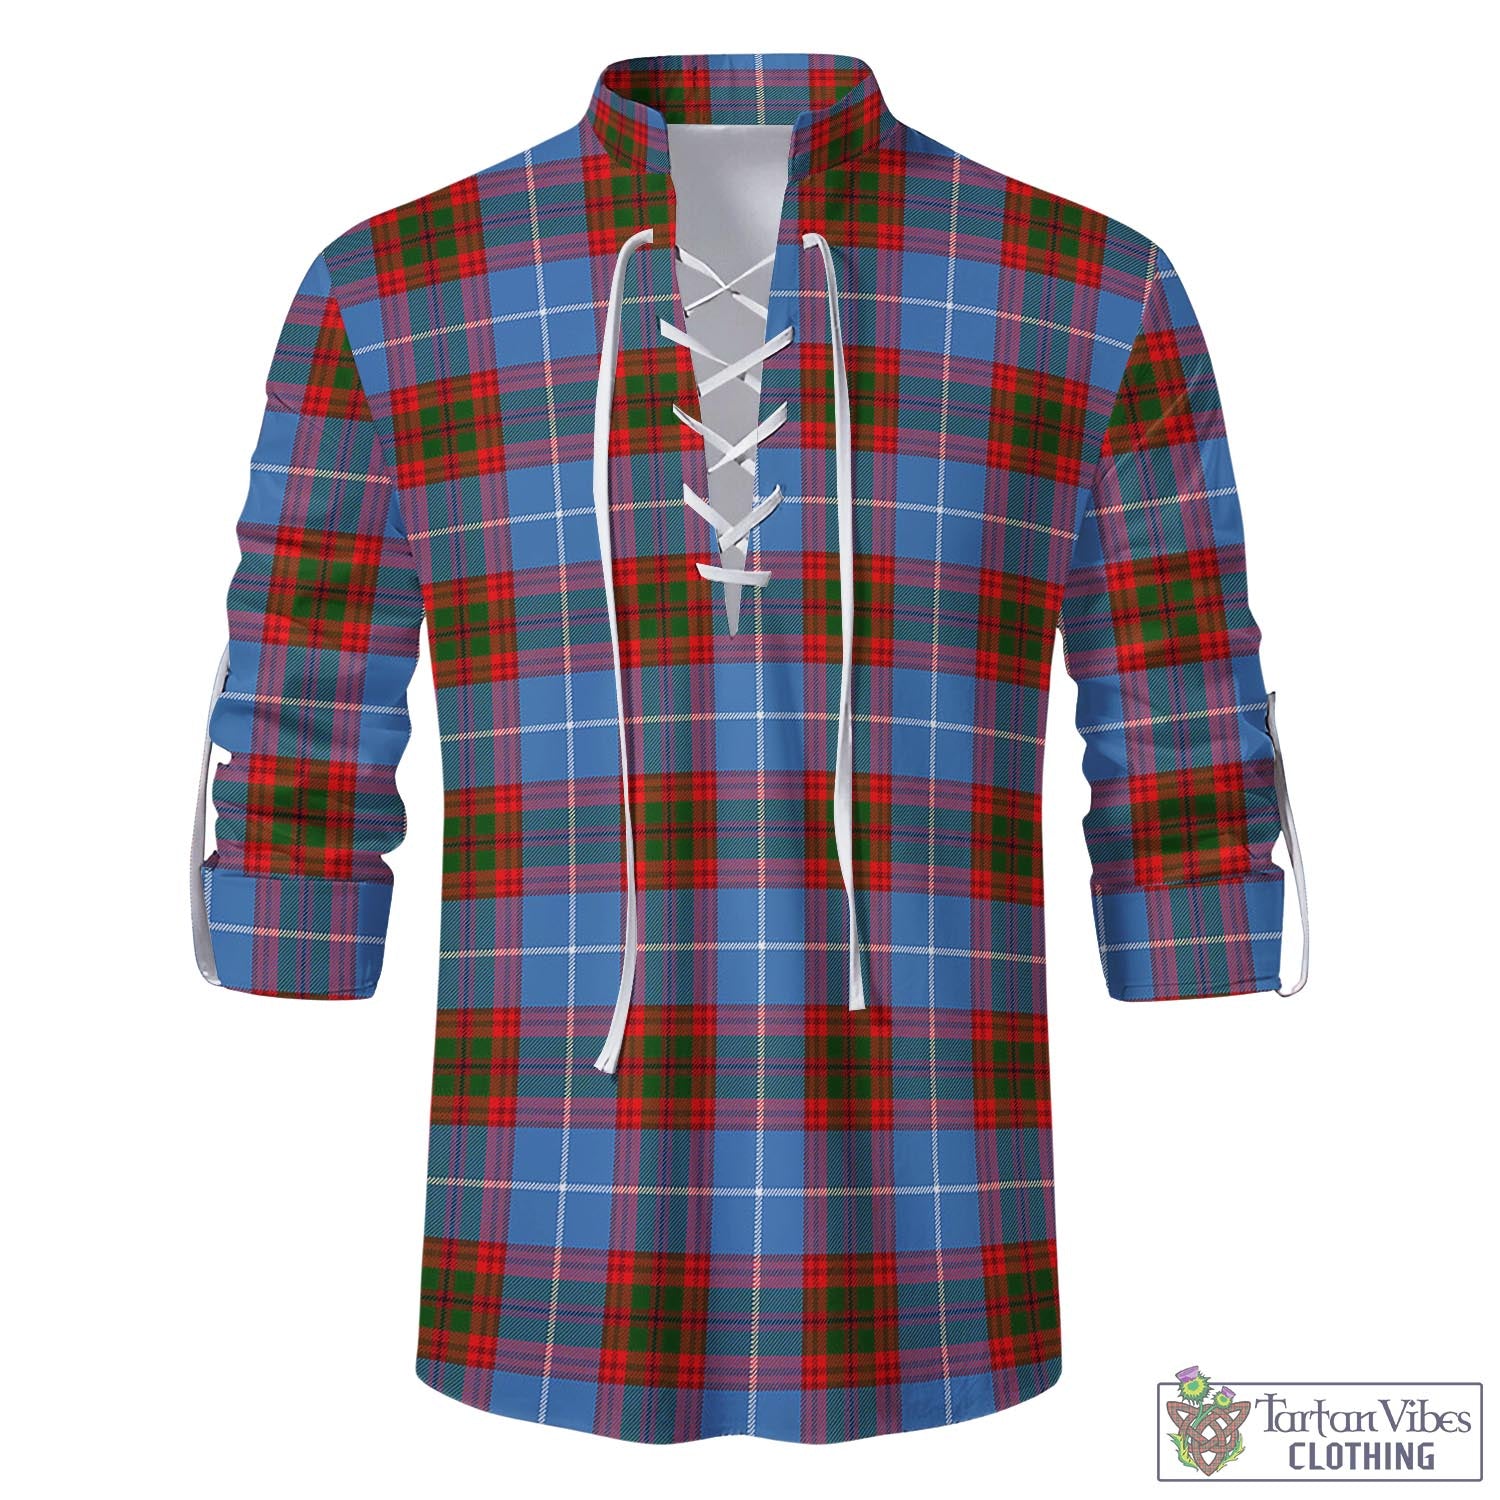 Tartan Vibes Clothing Pennycook Tartan Men's Scottish Traditional Jacobite Ghillie Kilt Shirt